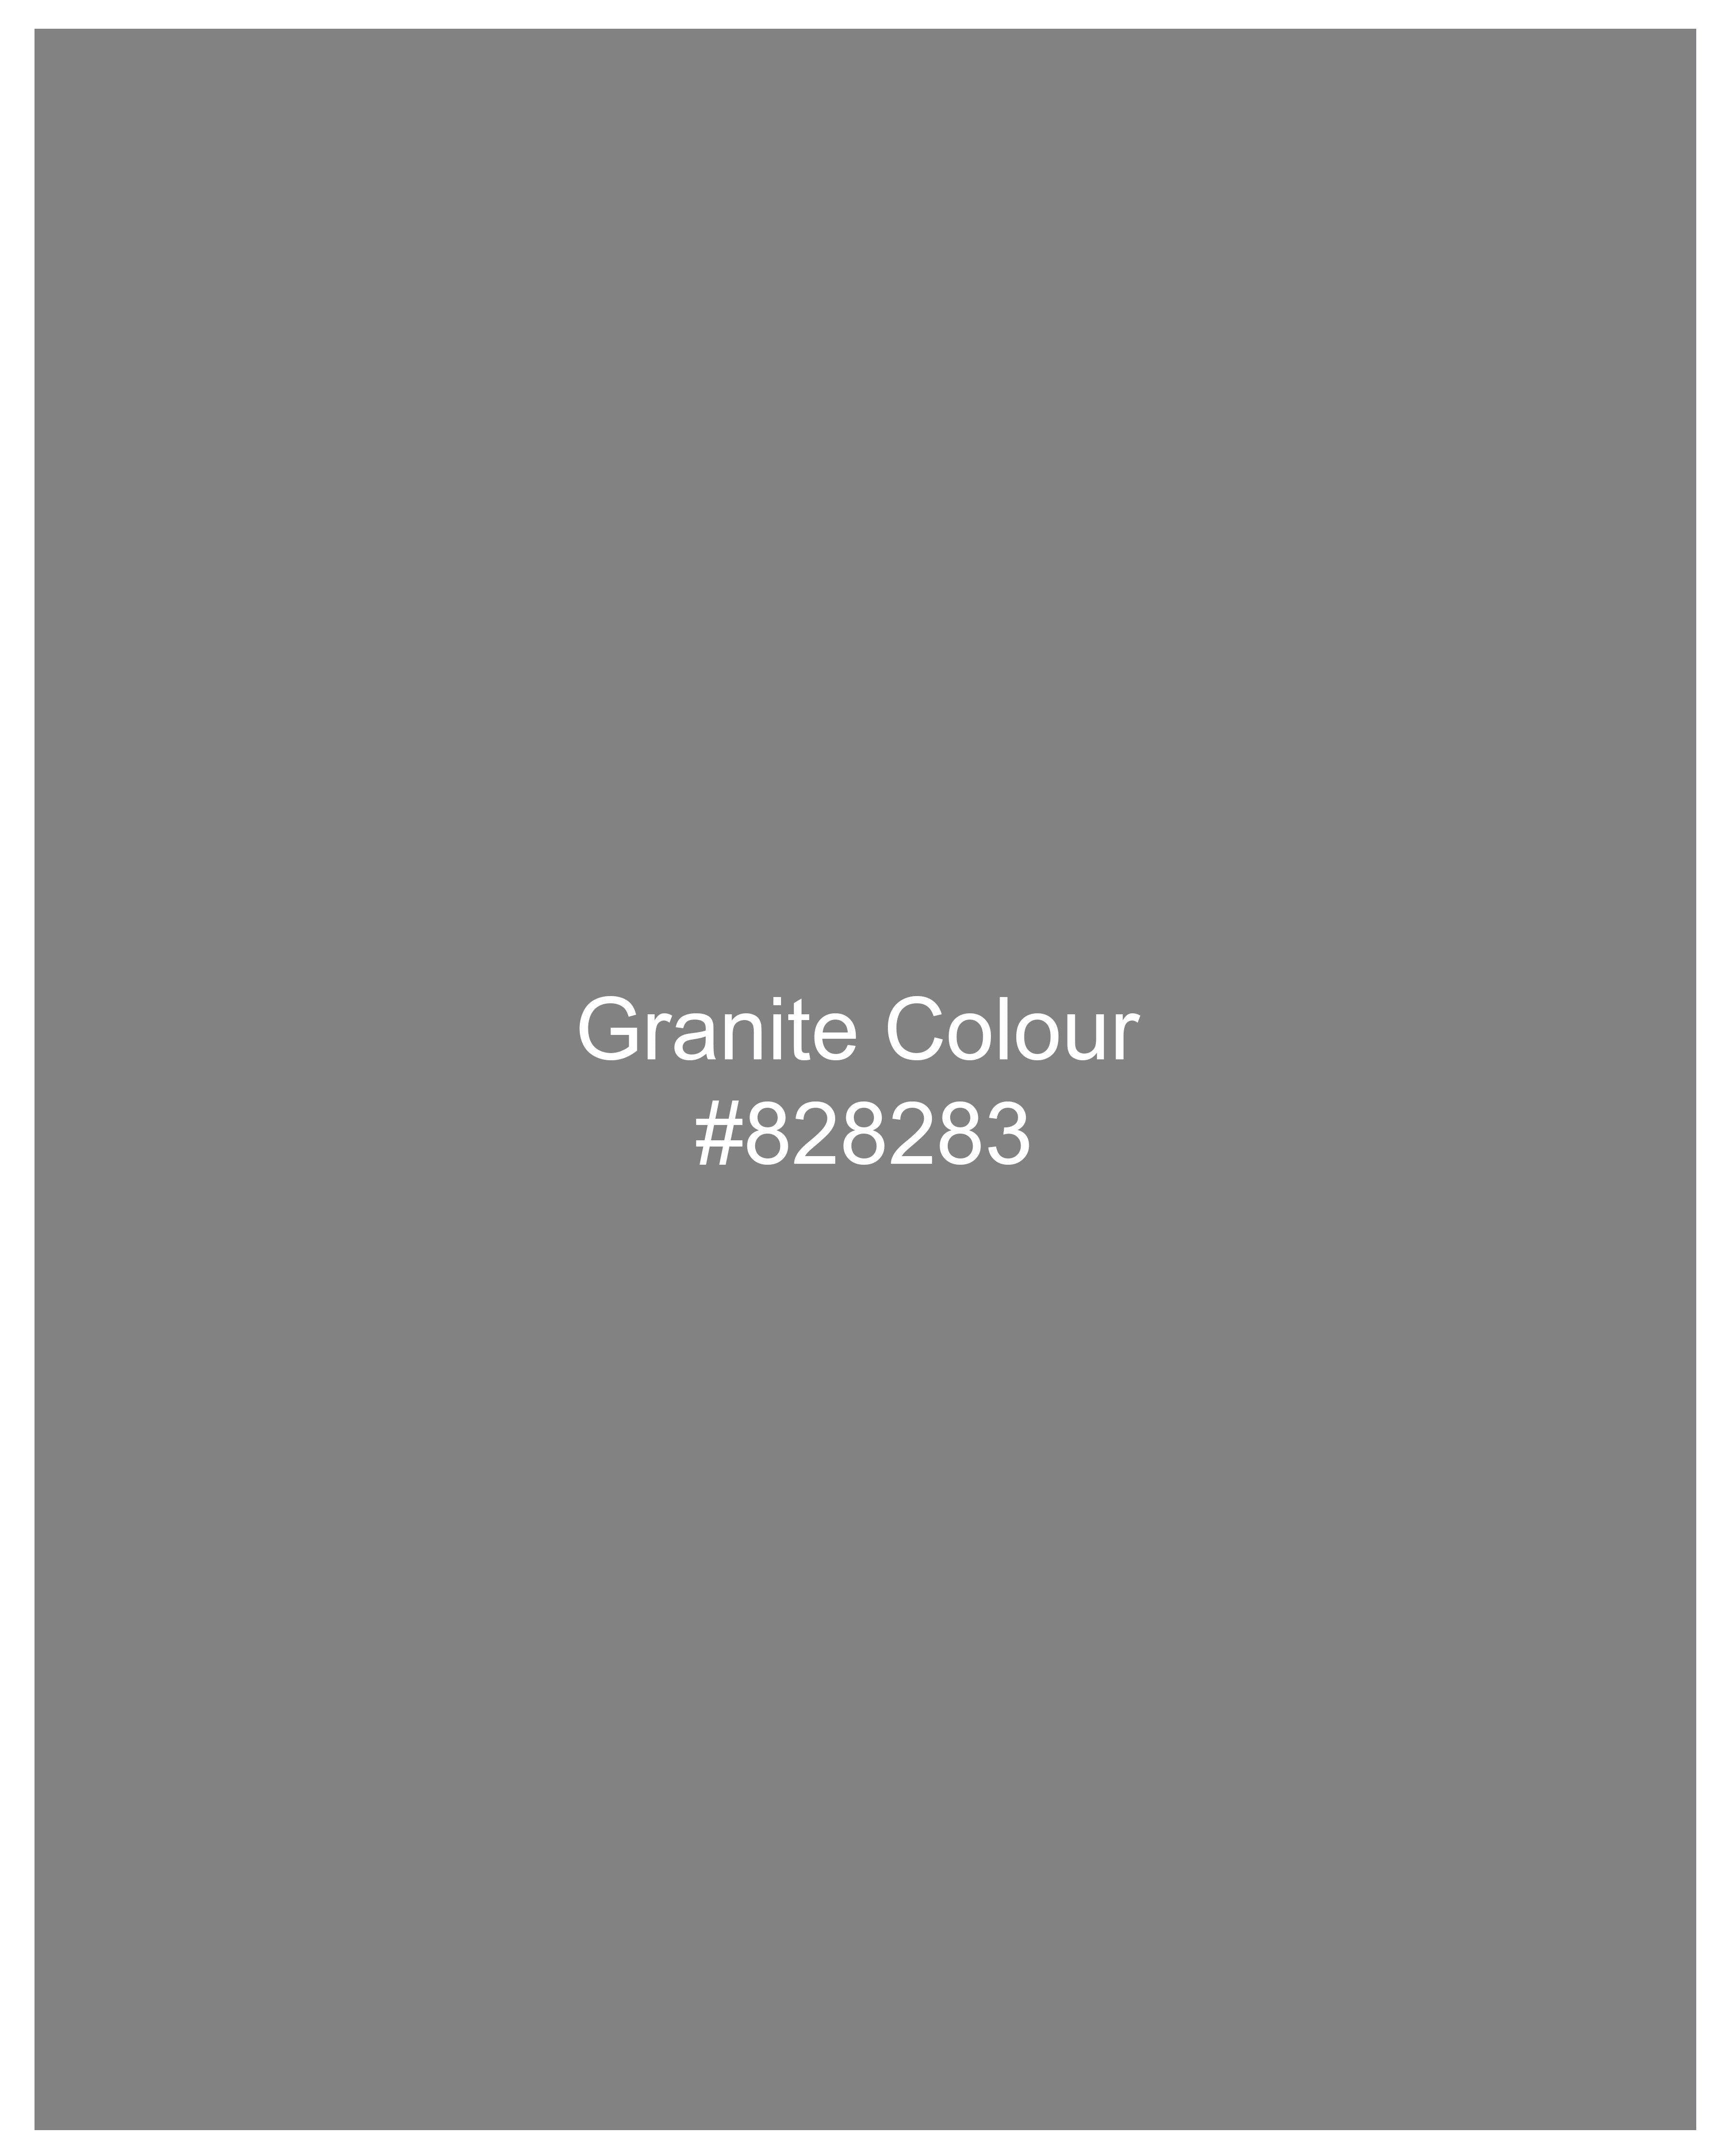 Granite Gray Houndstooth Shirt 10139-38, 10139-H-38, 10139-39, 10139-H-39, 10139-40, 10139-H-40, 10139-42, 10139-H-42, 10139-44, 10139-H-44, 10139-46, 10139-H-46, 10139-48, 10139-H-48, 10139-50, 10139-H-50, 10139-52, 10139-H-52